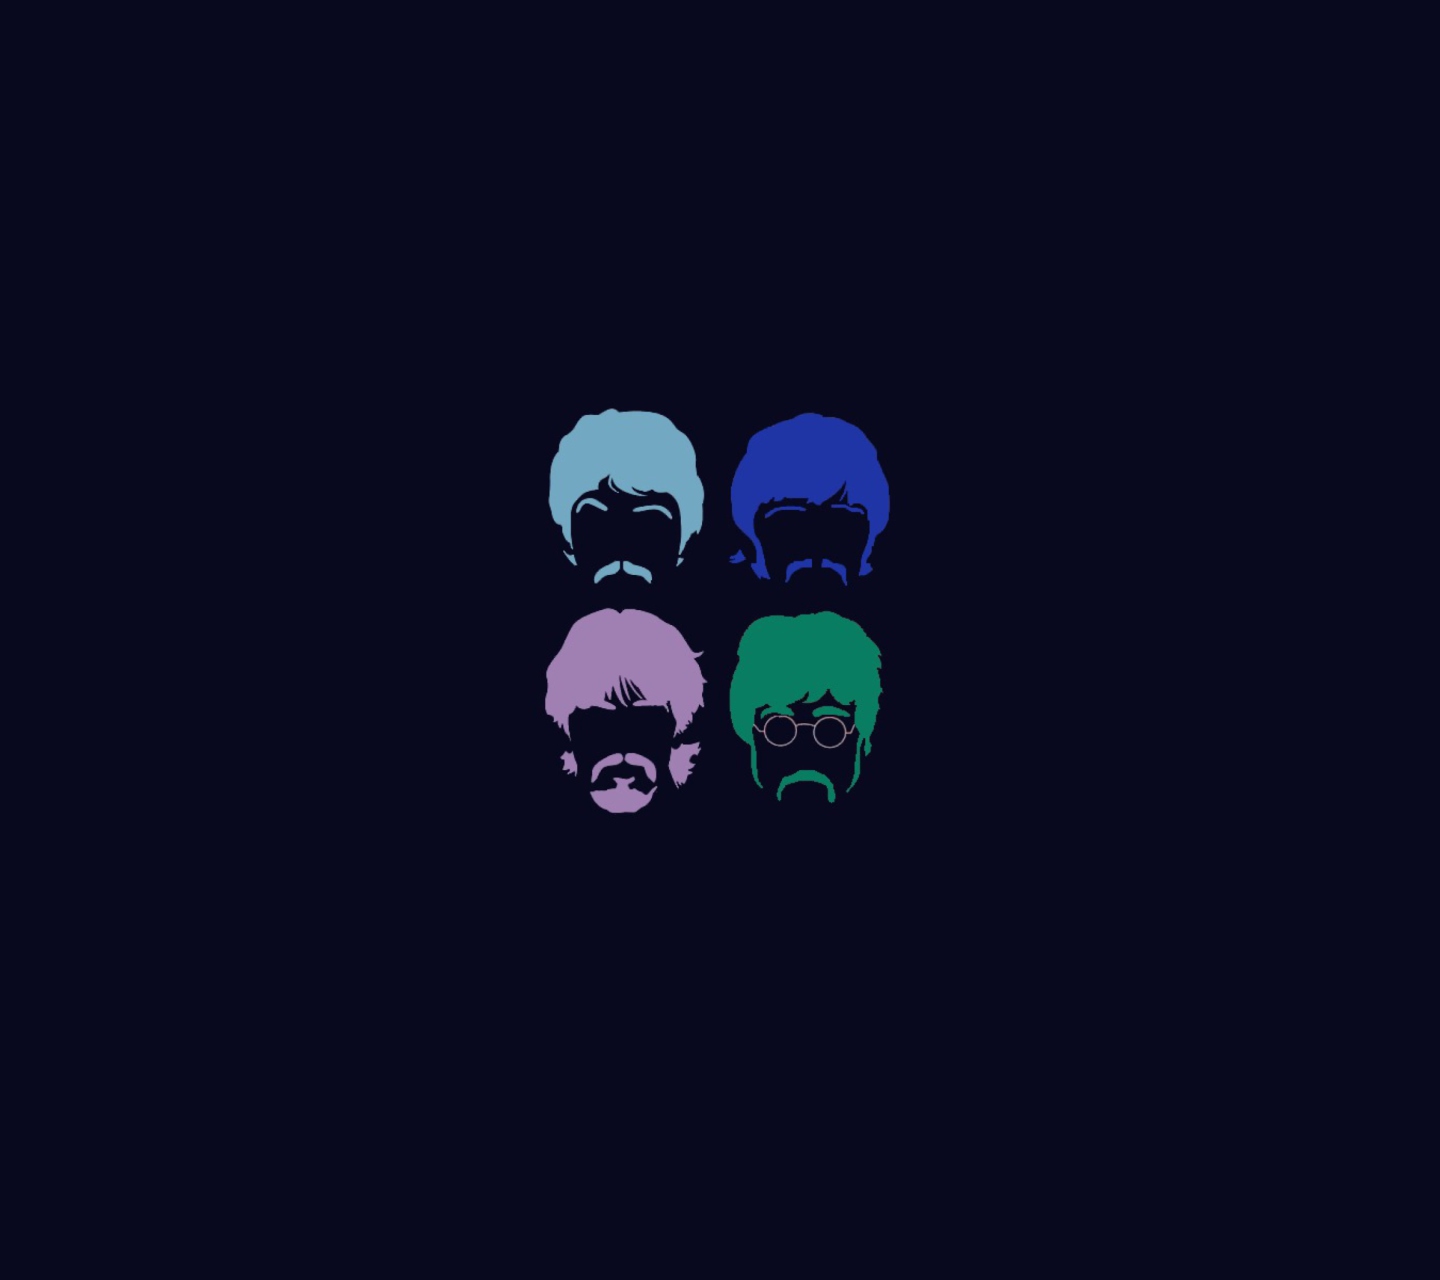 Das The Beatles Wallpaper 1440x1280